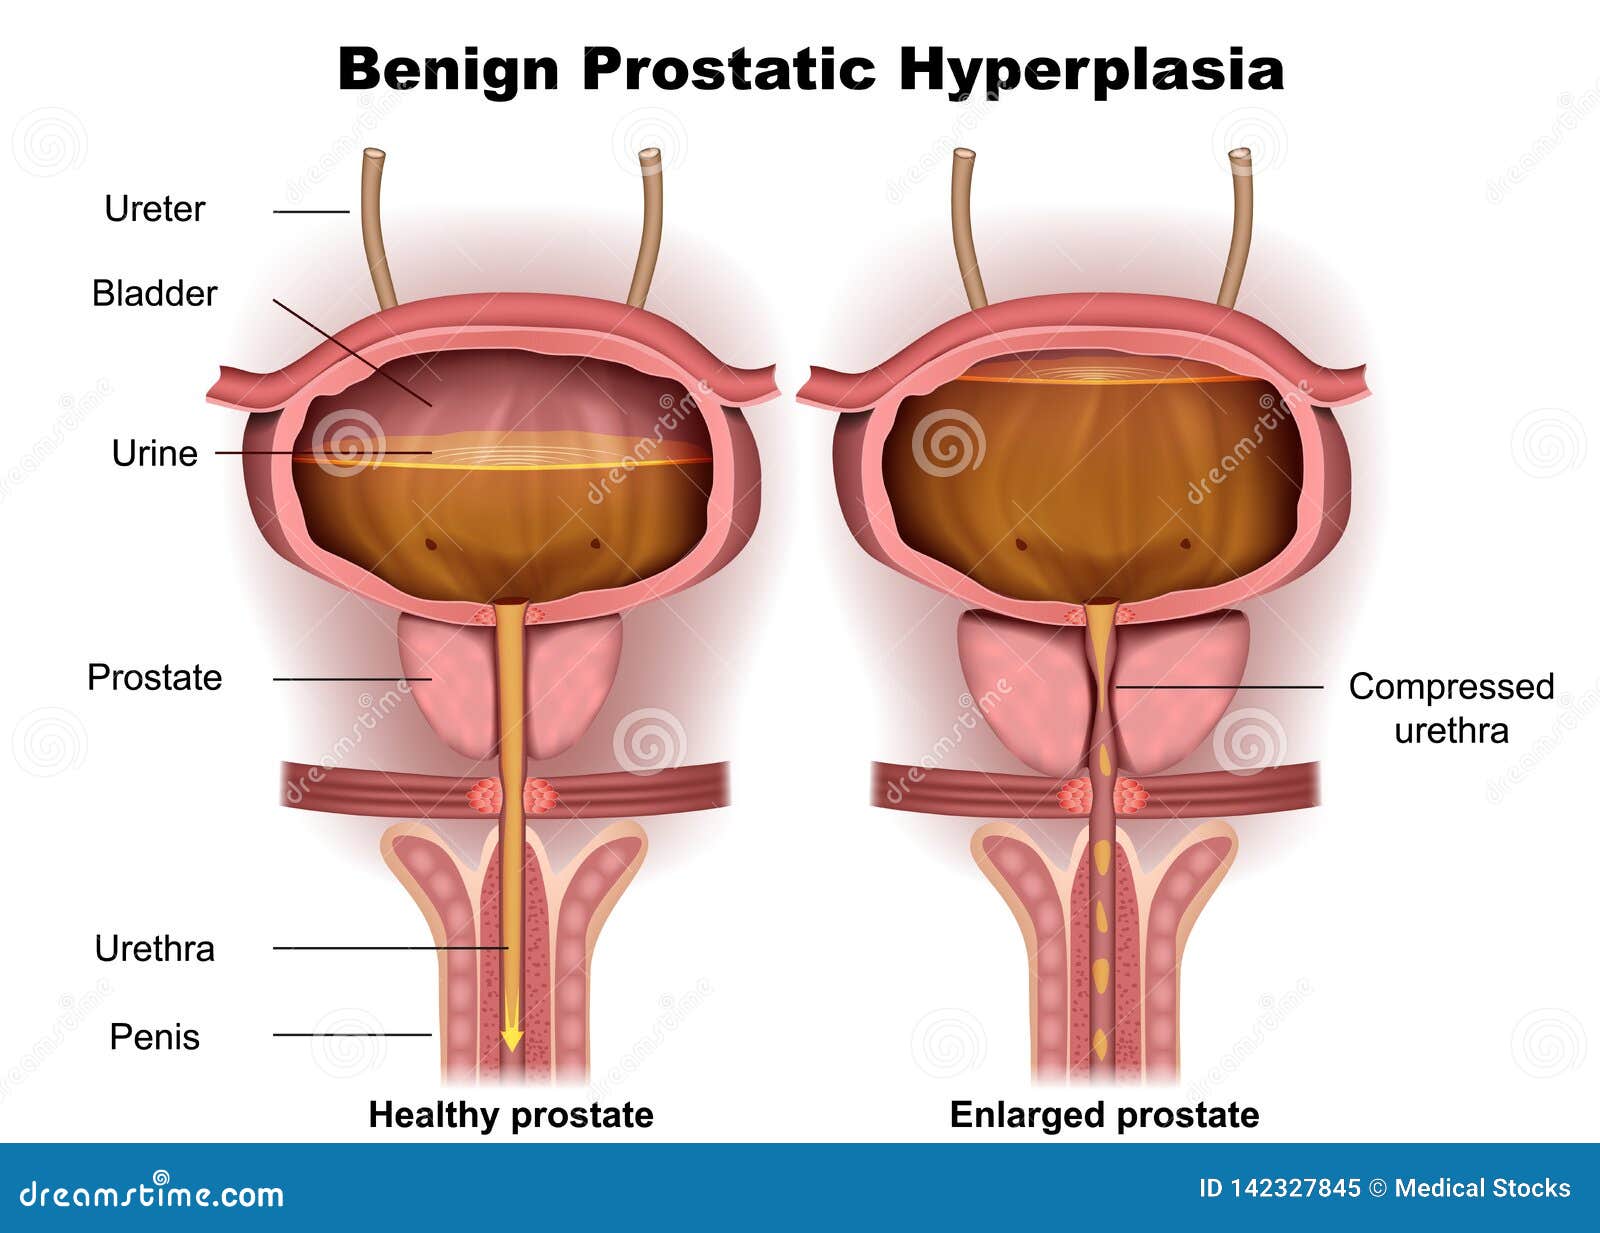 Fájl:Benign Prostatic Hyperplasia nci-voljpg – Wikipédia, Méretek Hyperplasia Prostate Mi az